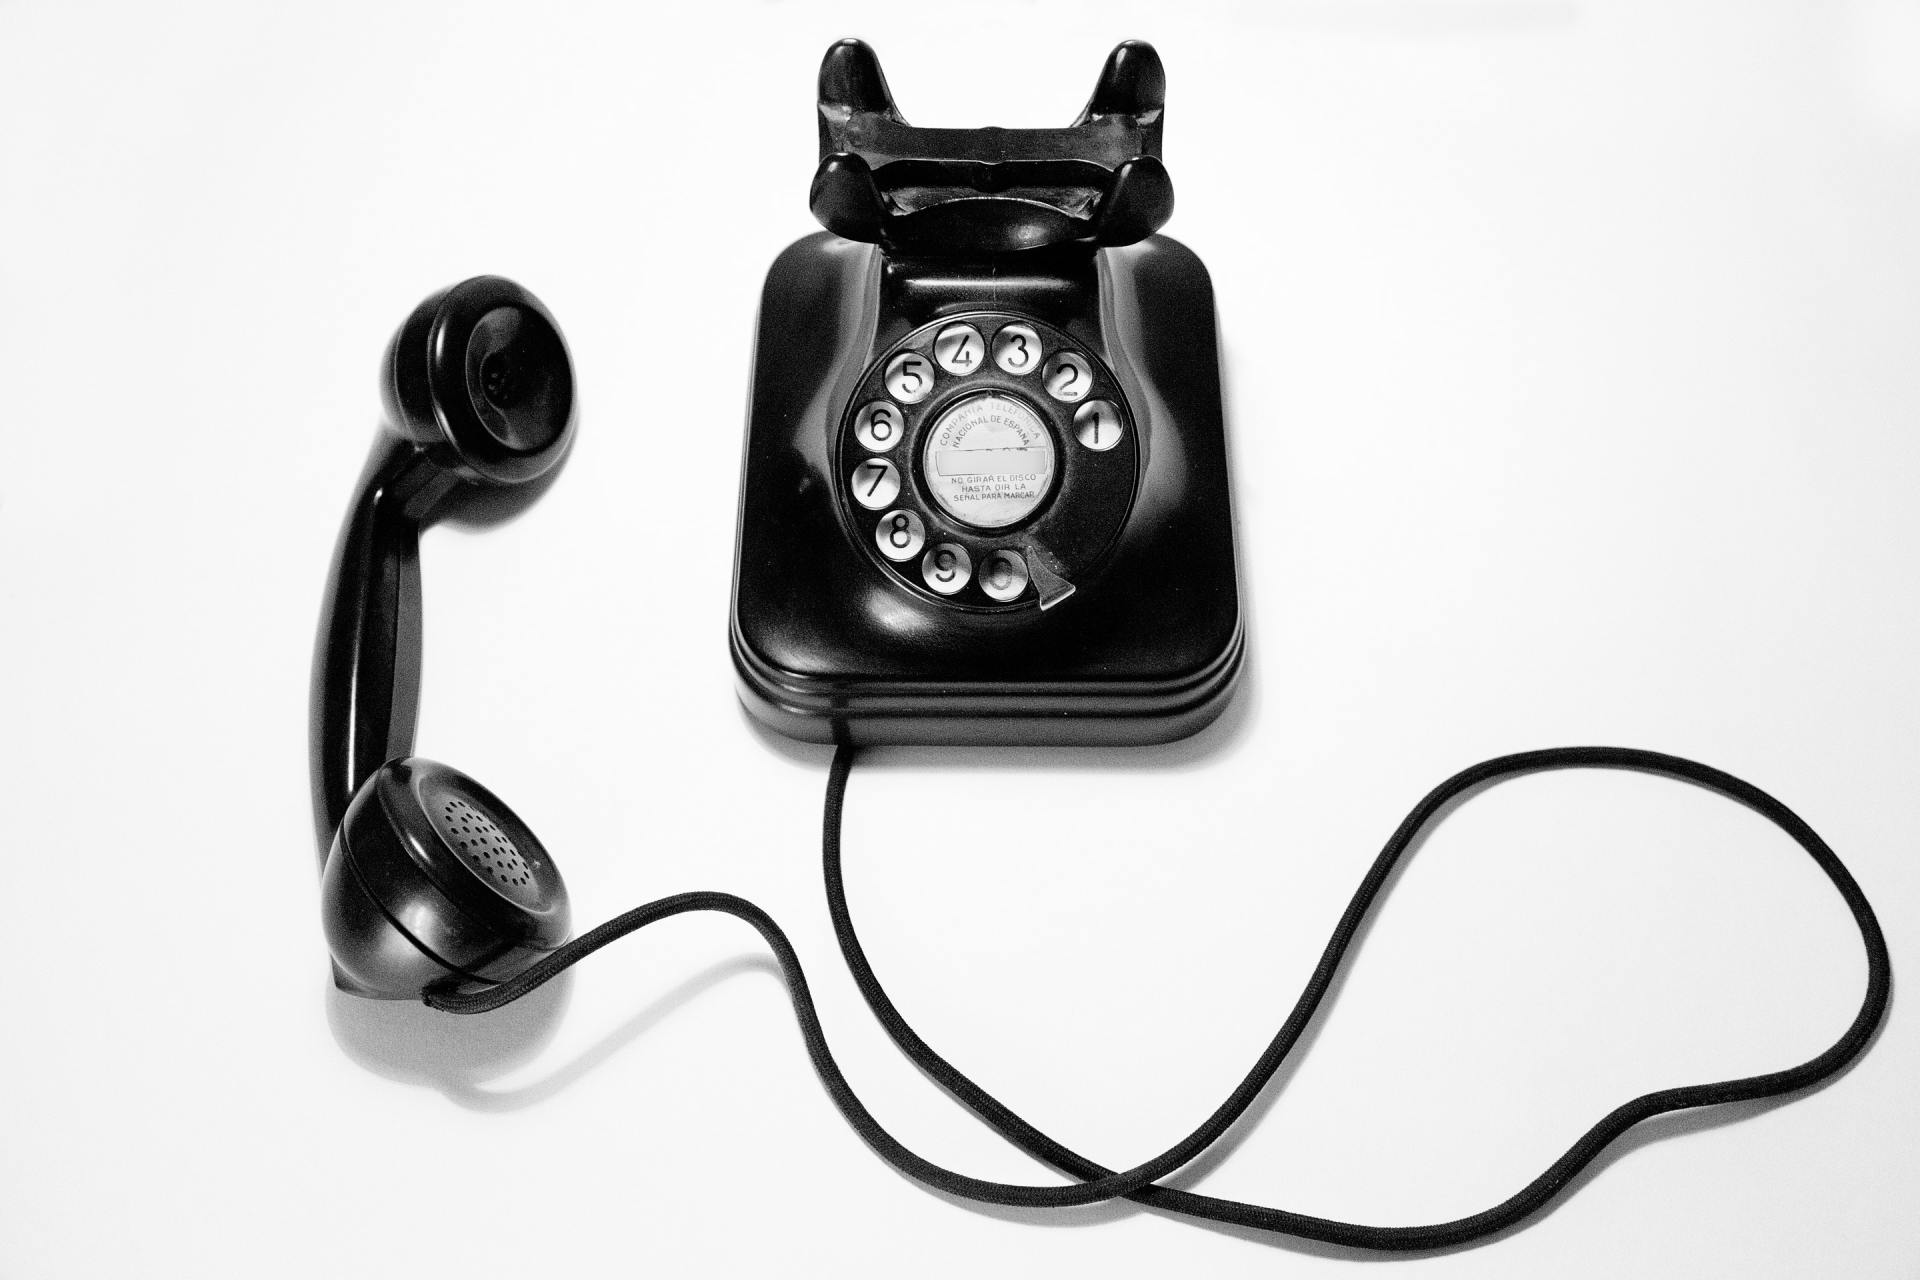 Political Phone Calls and Political Texts